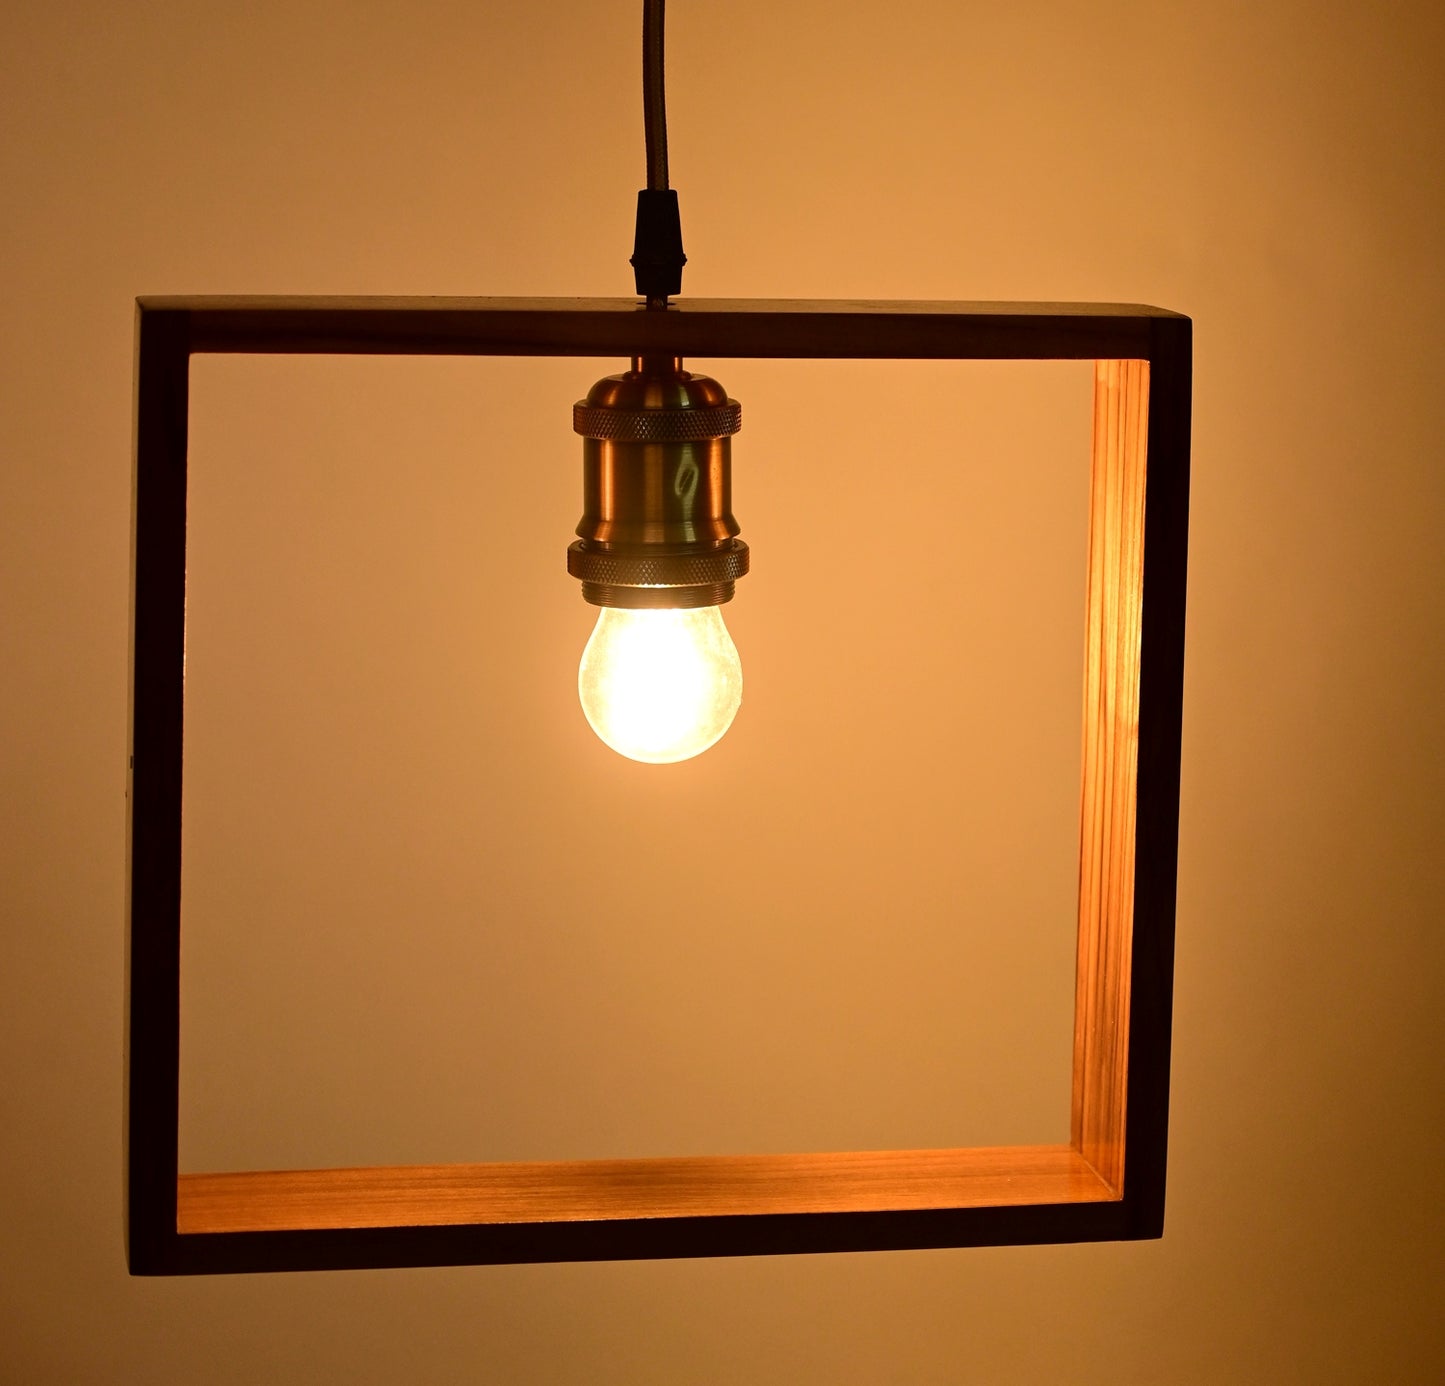 The Weaver's Nest Rustic Teak Wood  Hanging Light/Lamp, Pendant Light for Home Decor, Living Room,  Study Room (Brown, 23 X 6 X 20 cm)